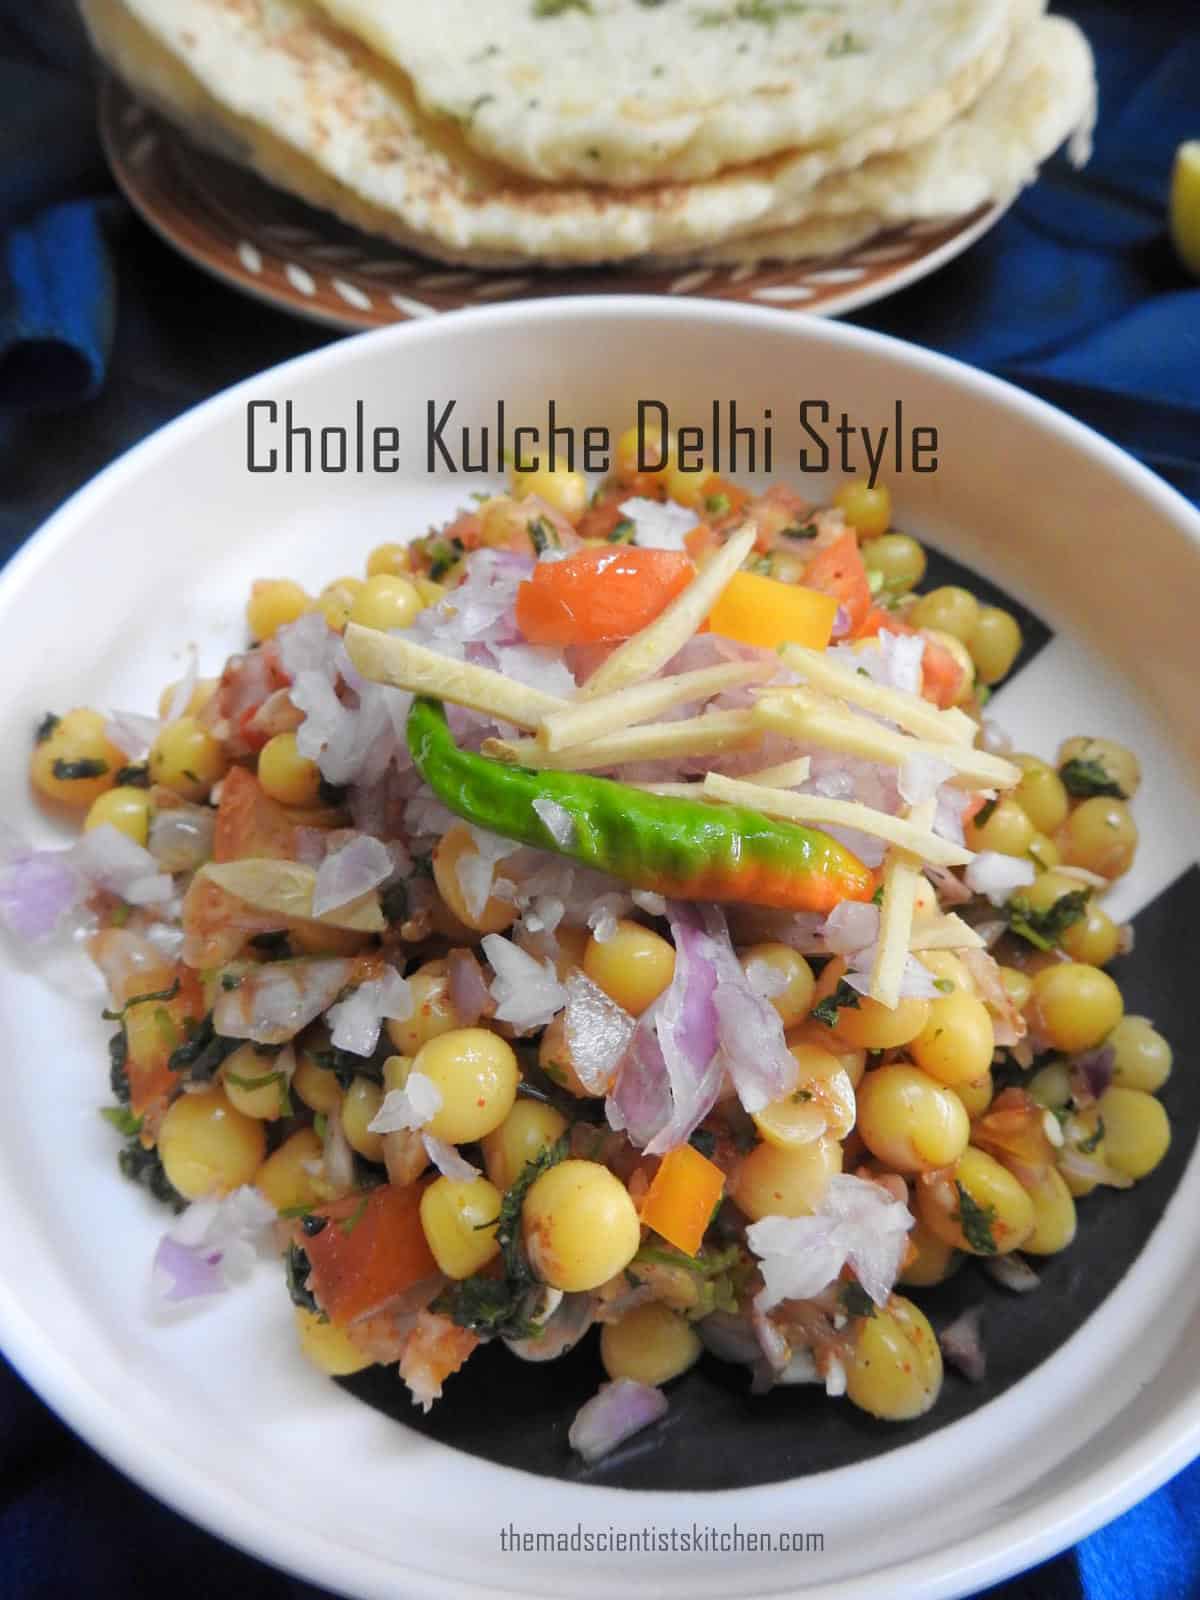 Delhi street food,Home made Kulcha Recipe,Maida ka Kulcha, Naan, Cholay, Dried White peas